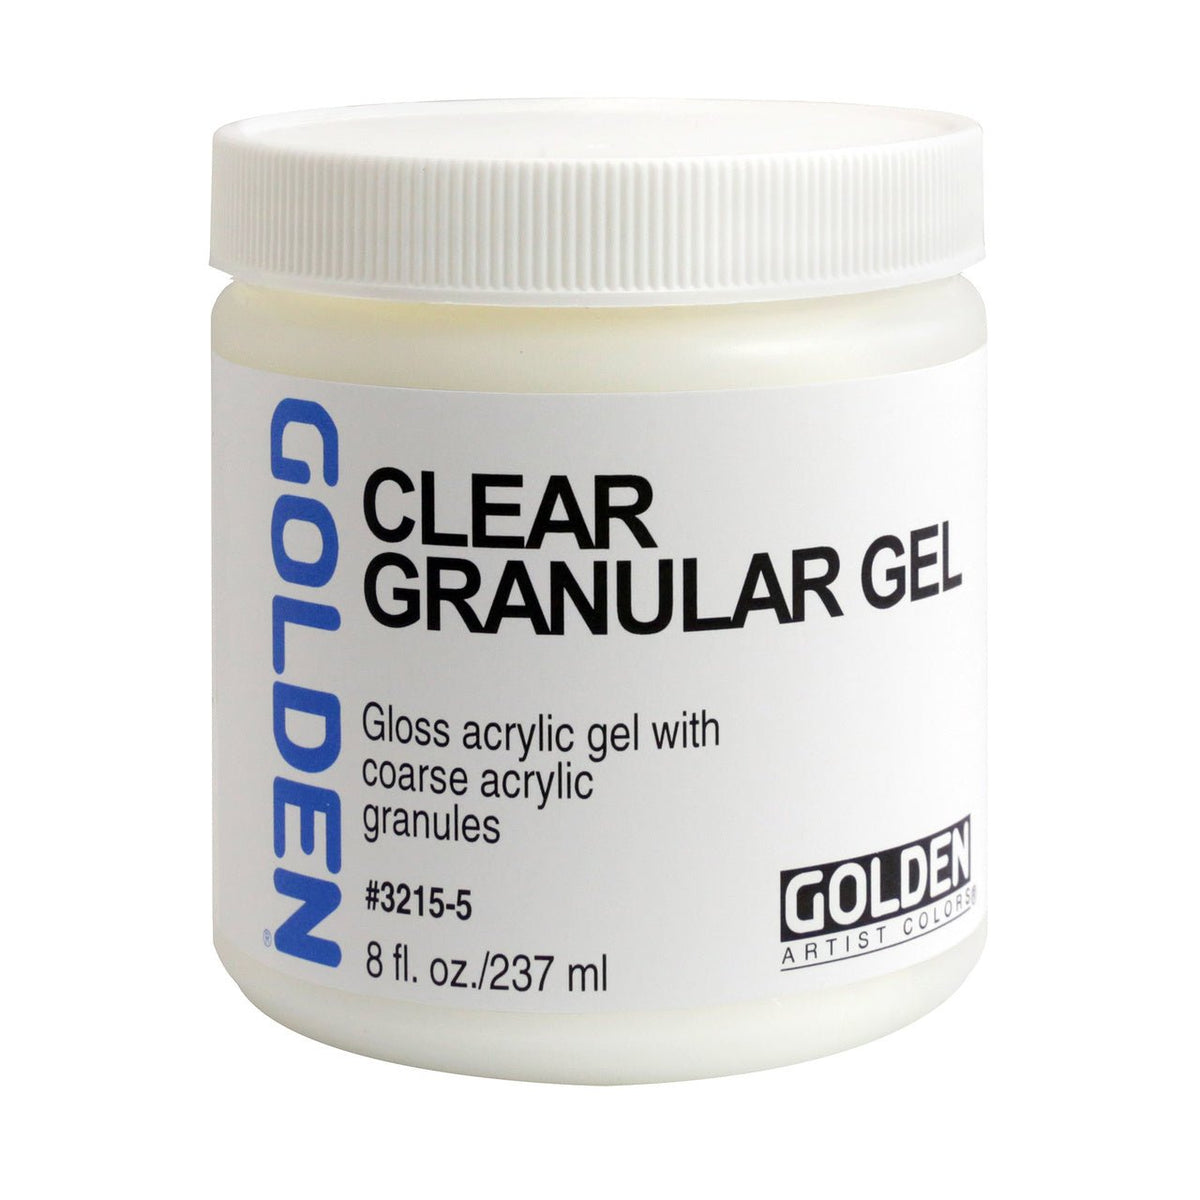 Golden Clear Granular Gel 8 oz - merriartist.com